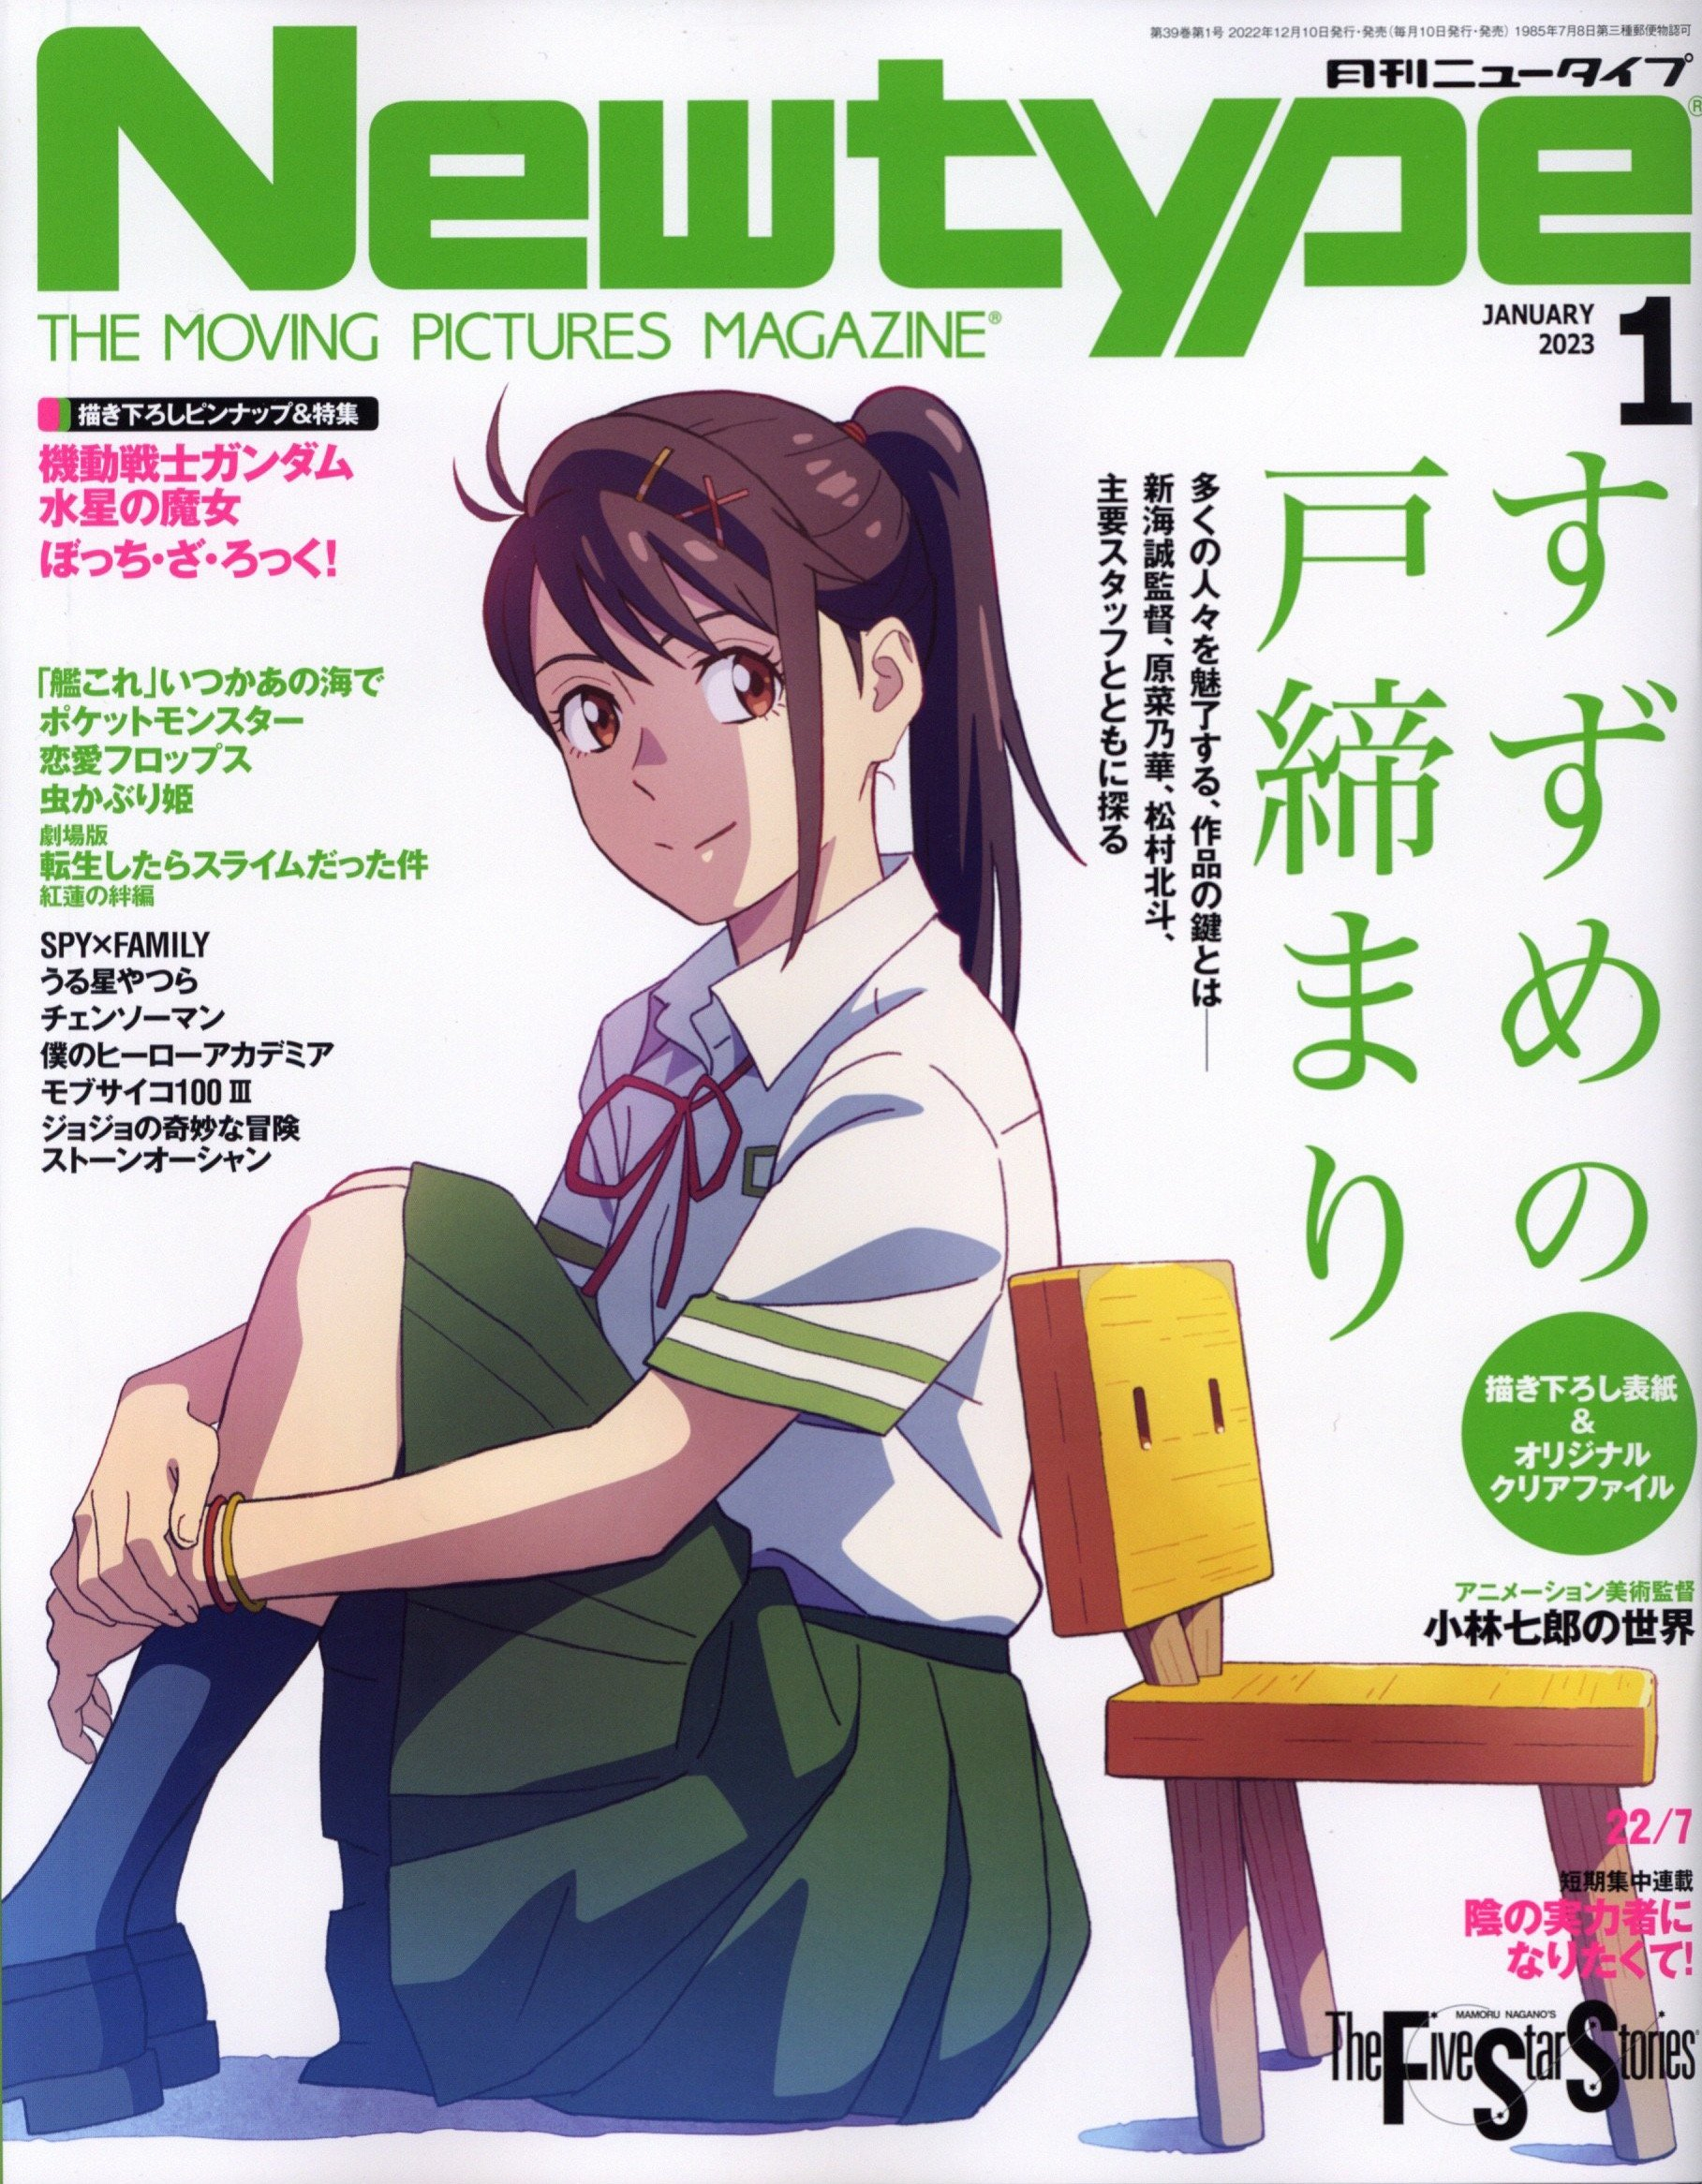 Tensei Shitara Slime Datta Ken Anime Poster – My Hot Posters